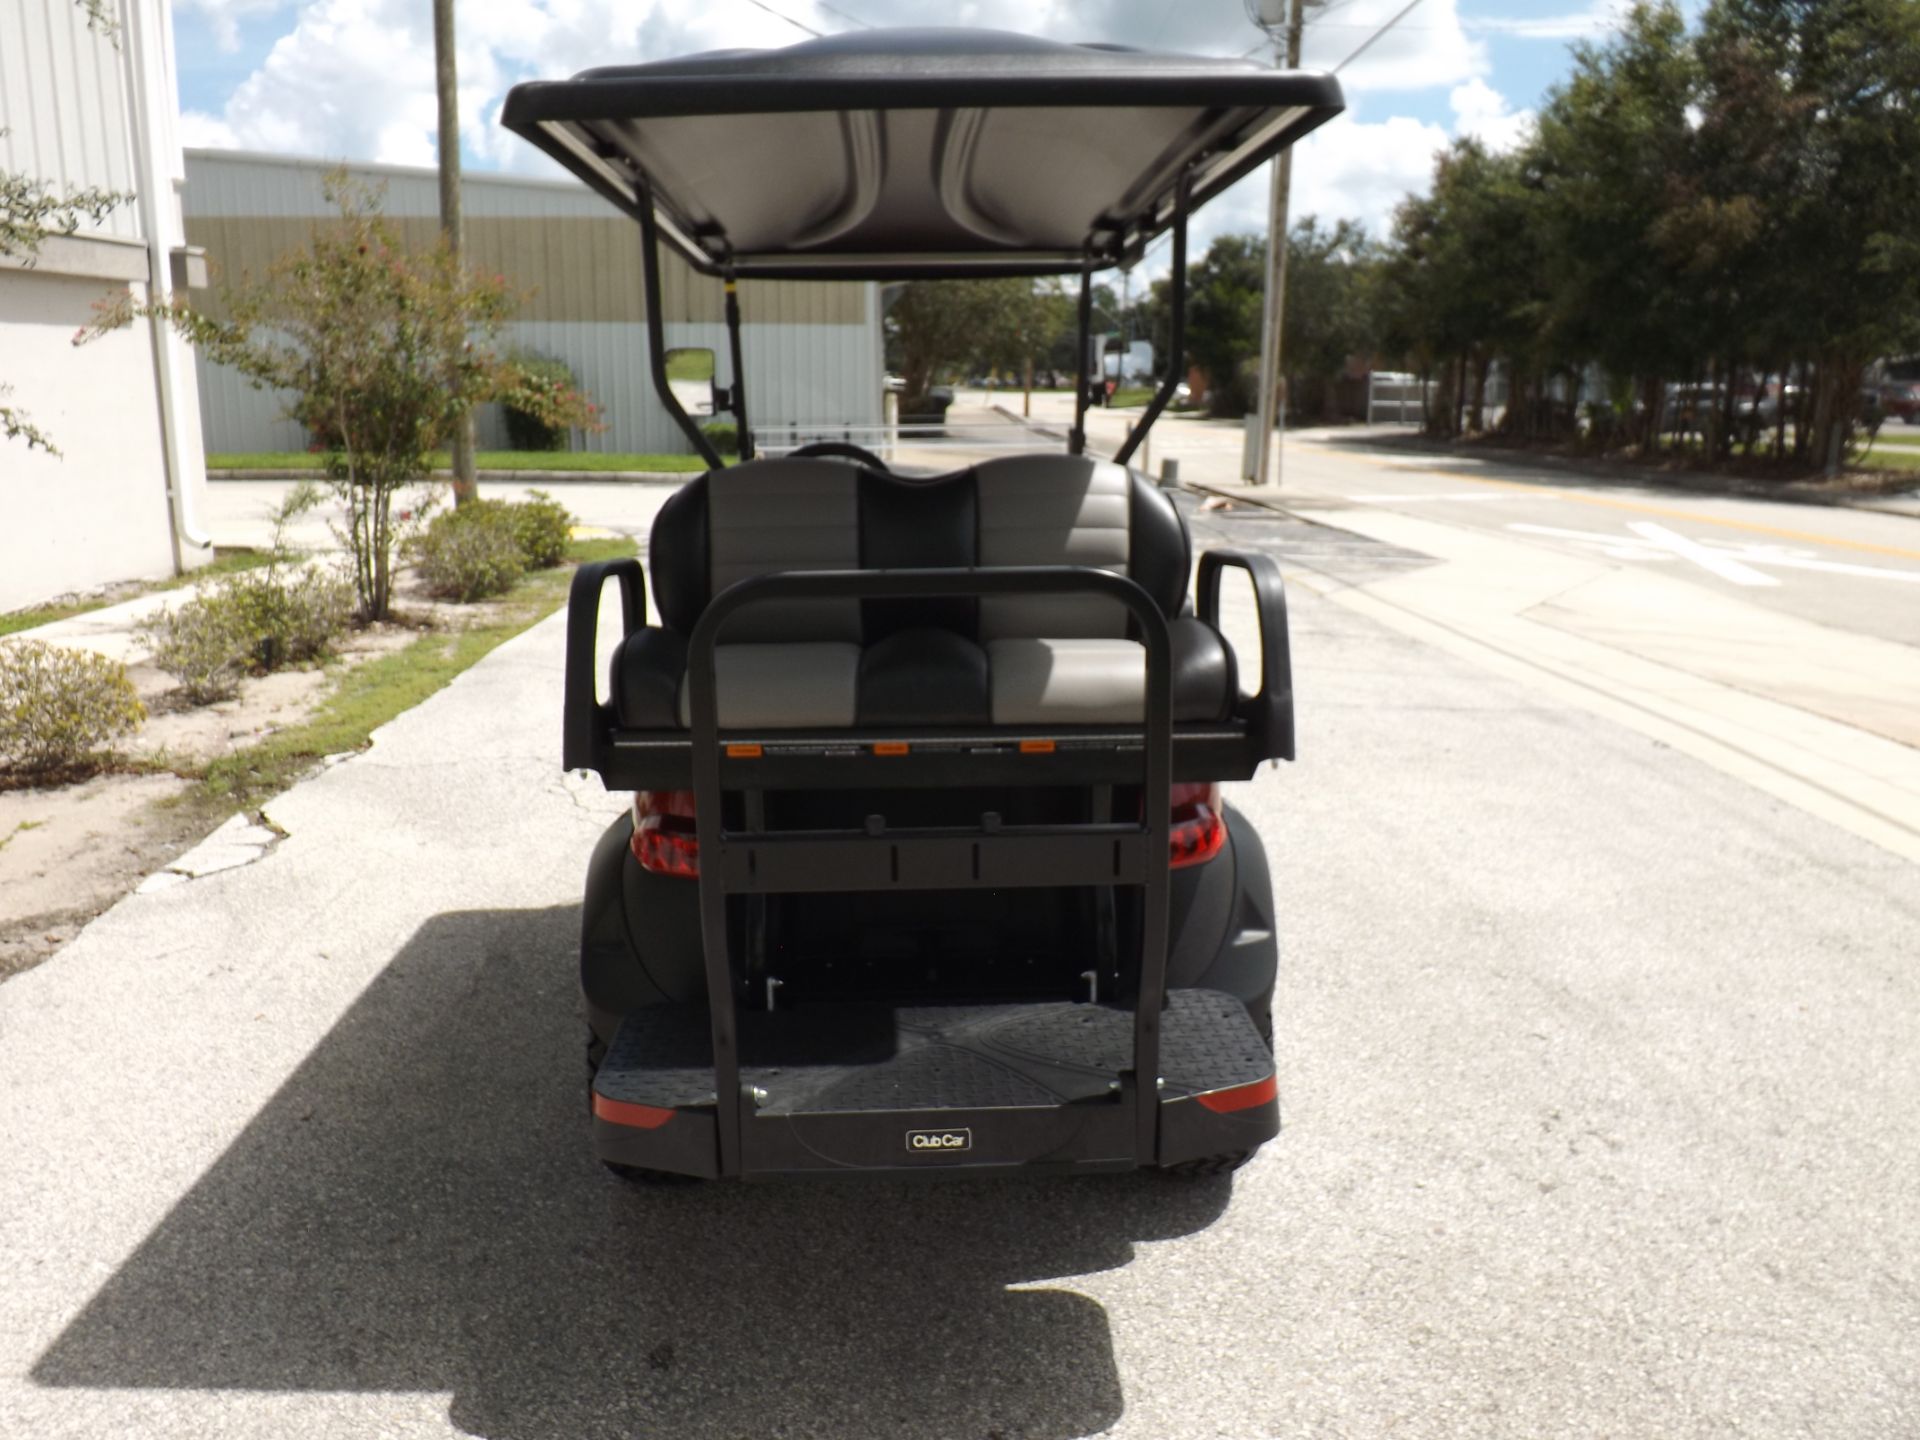 2023 Club Car Onward Lifted 4 Passenger Electric in Lakeland, Florida - Photo 4